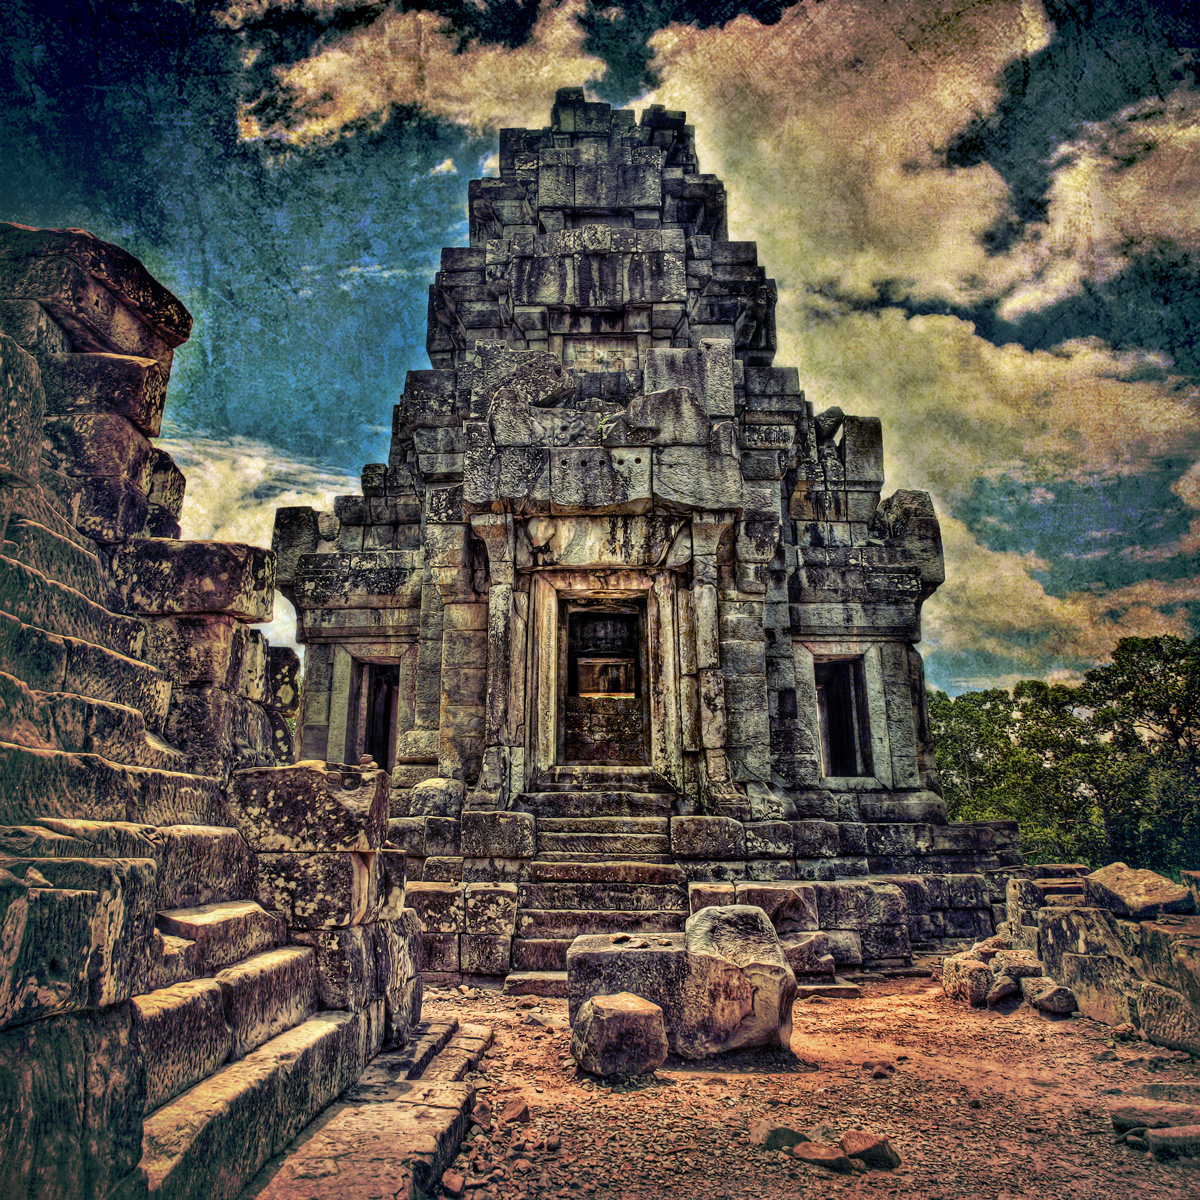 Textured Angkor Wat Architecture